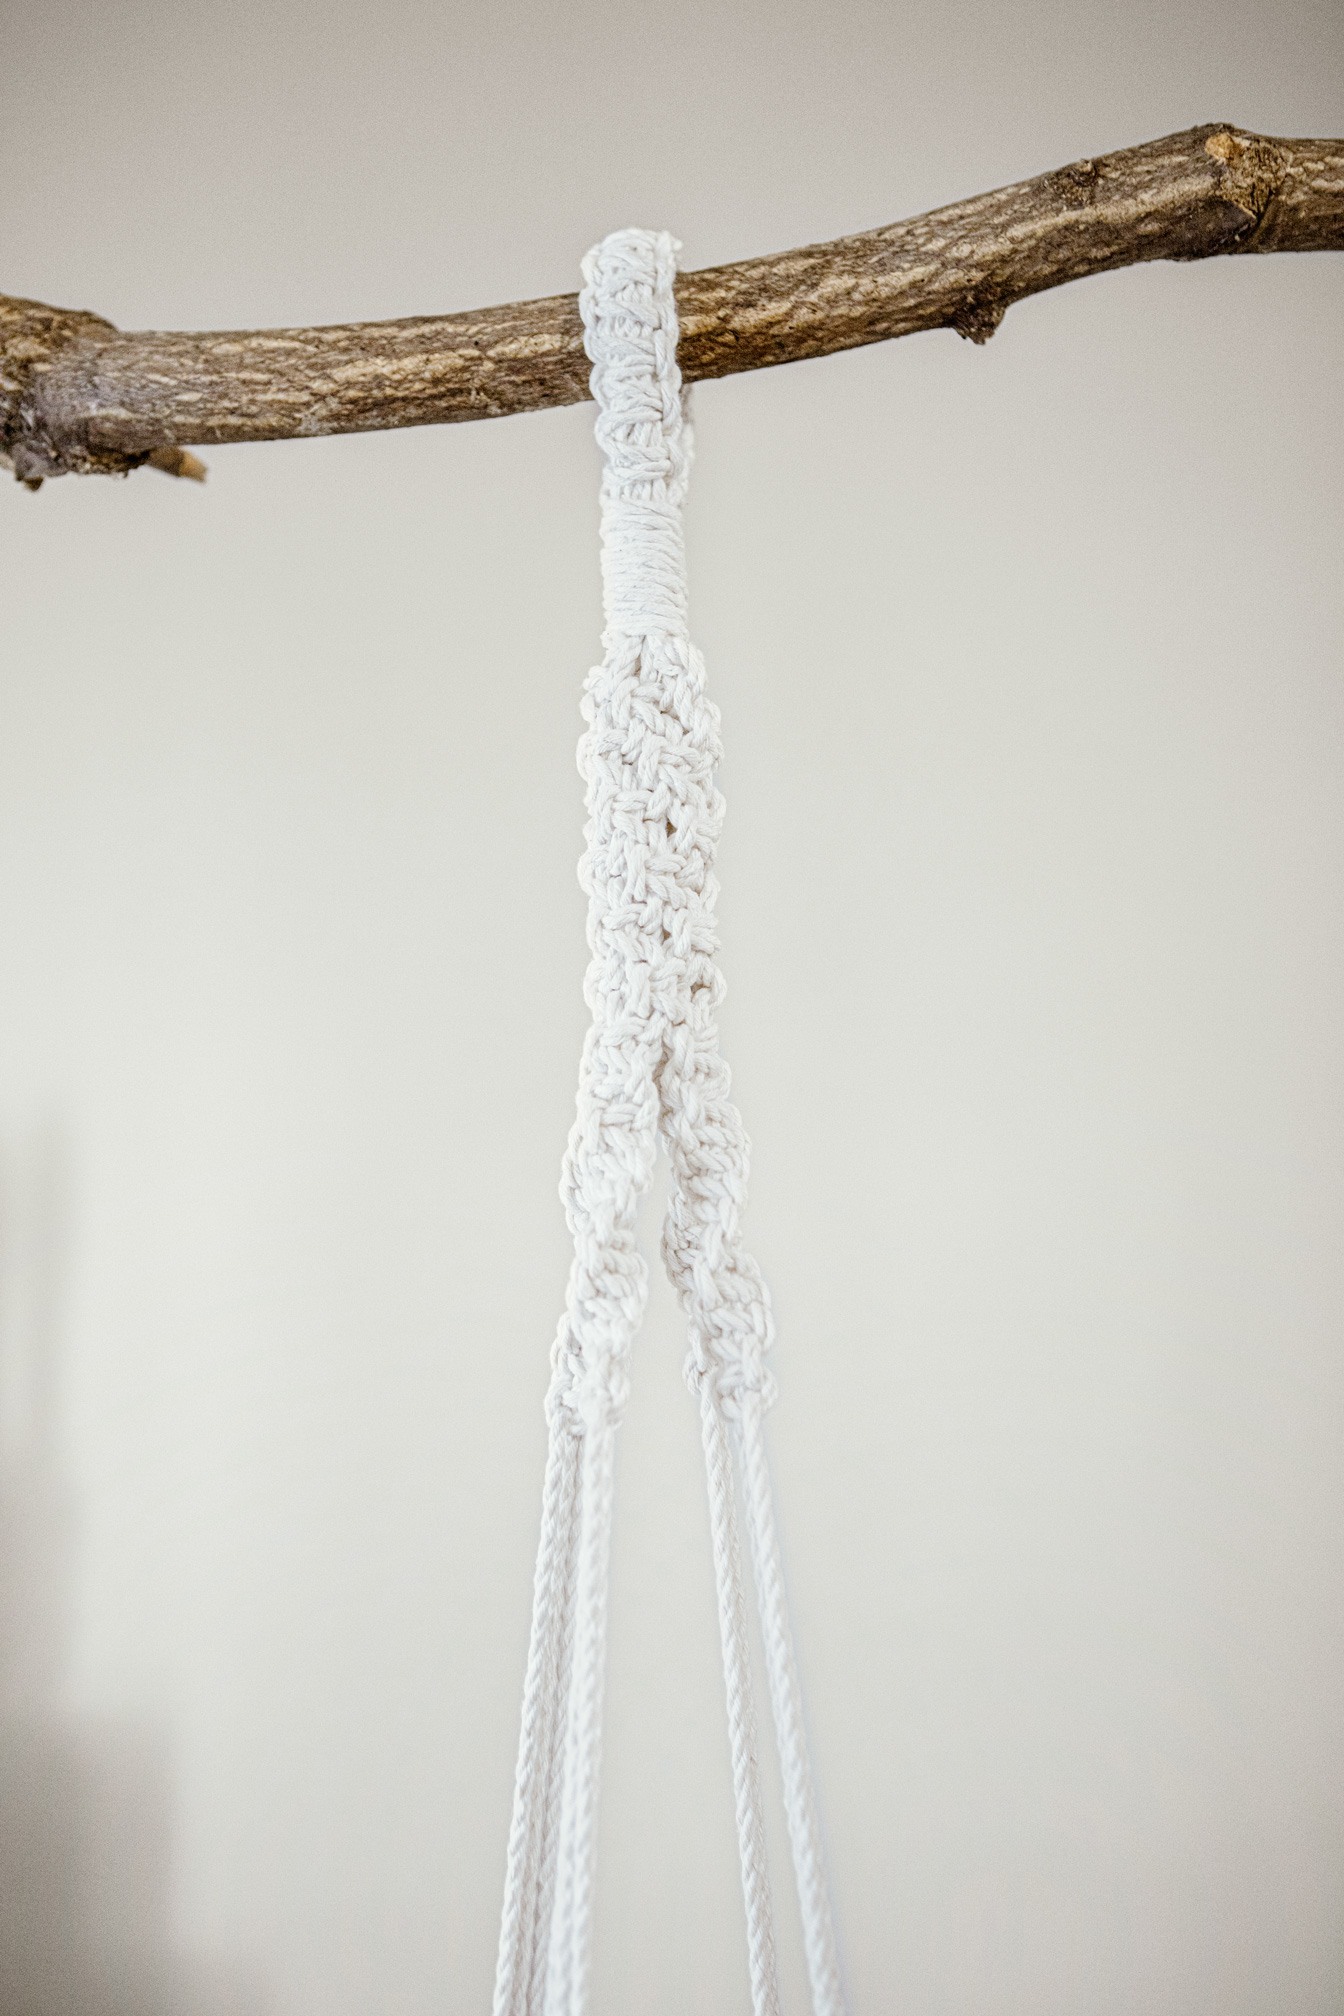 Detalle superior de macetero artesanal de macramé fabricado en algodón ecológico en color crudo